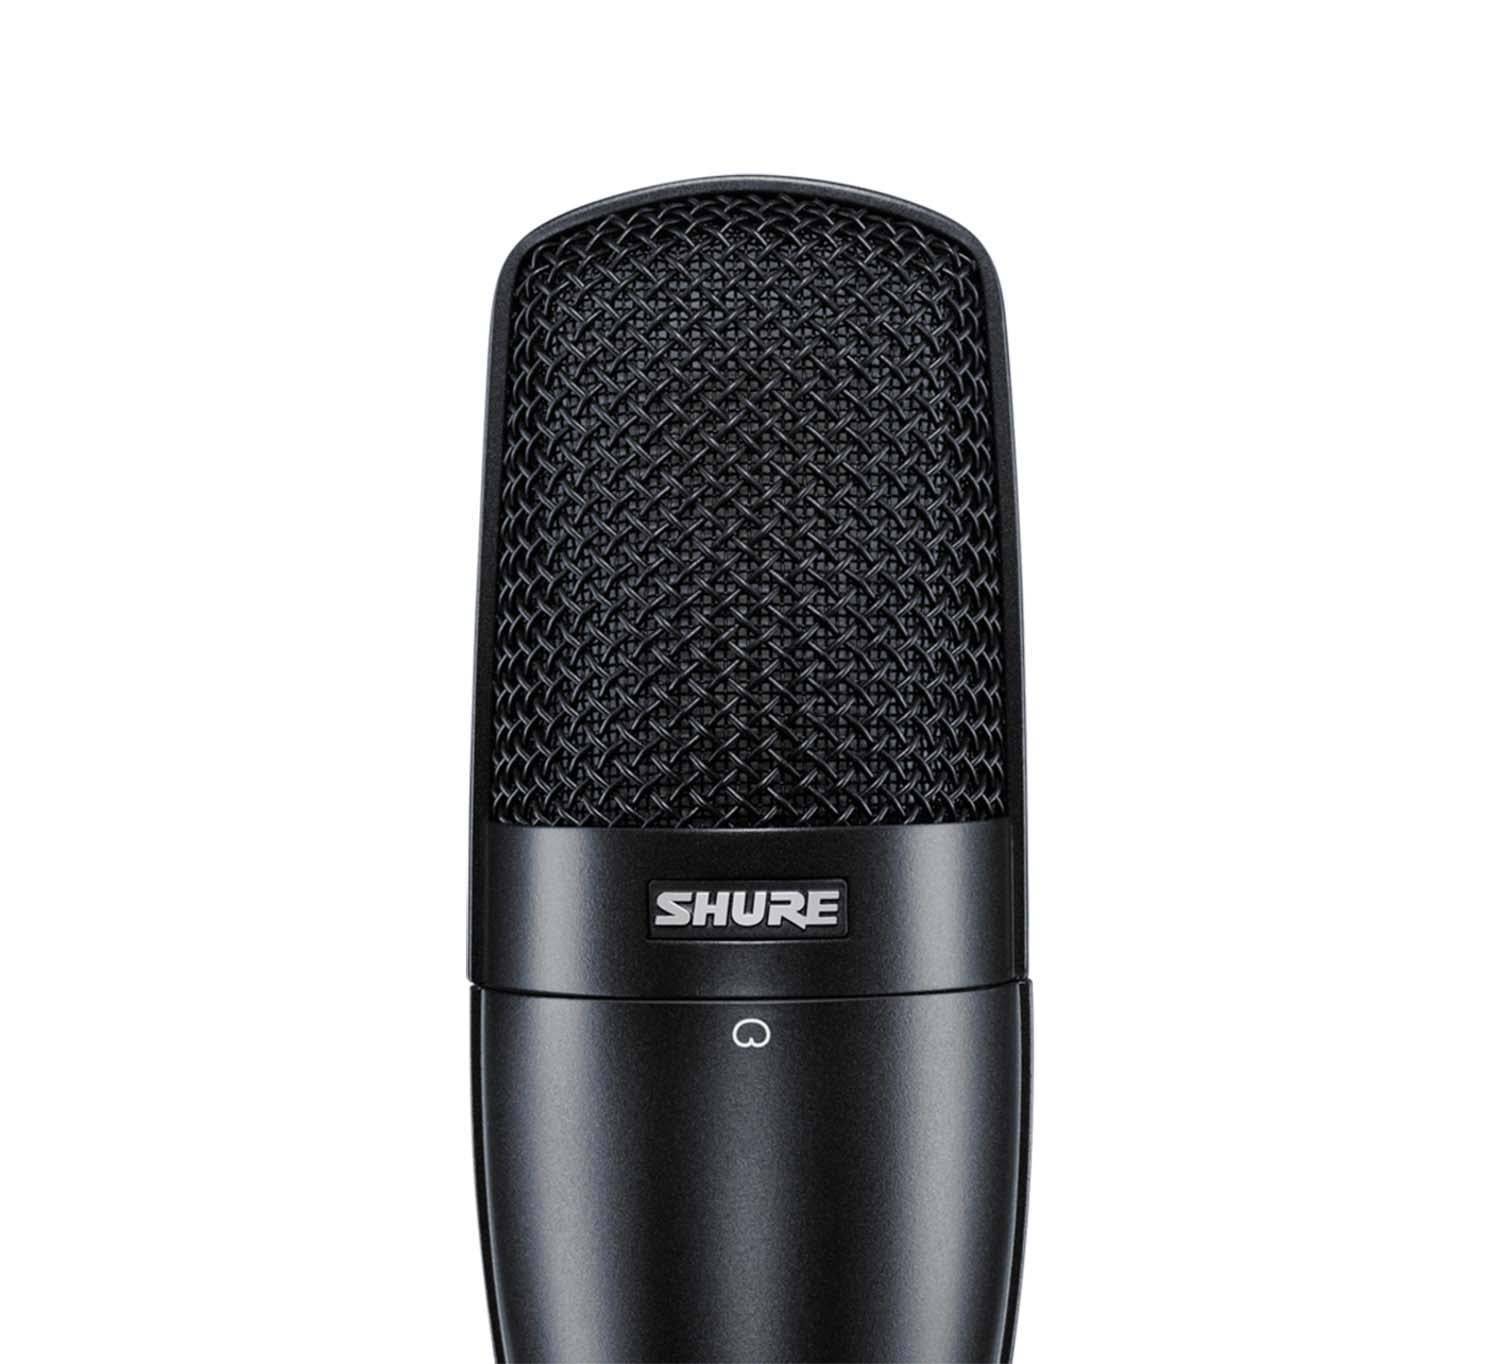 Shure SM27SC Cardiod Side Address Condenser Microphone - Hollywood DJ